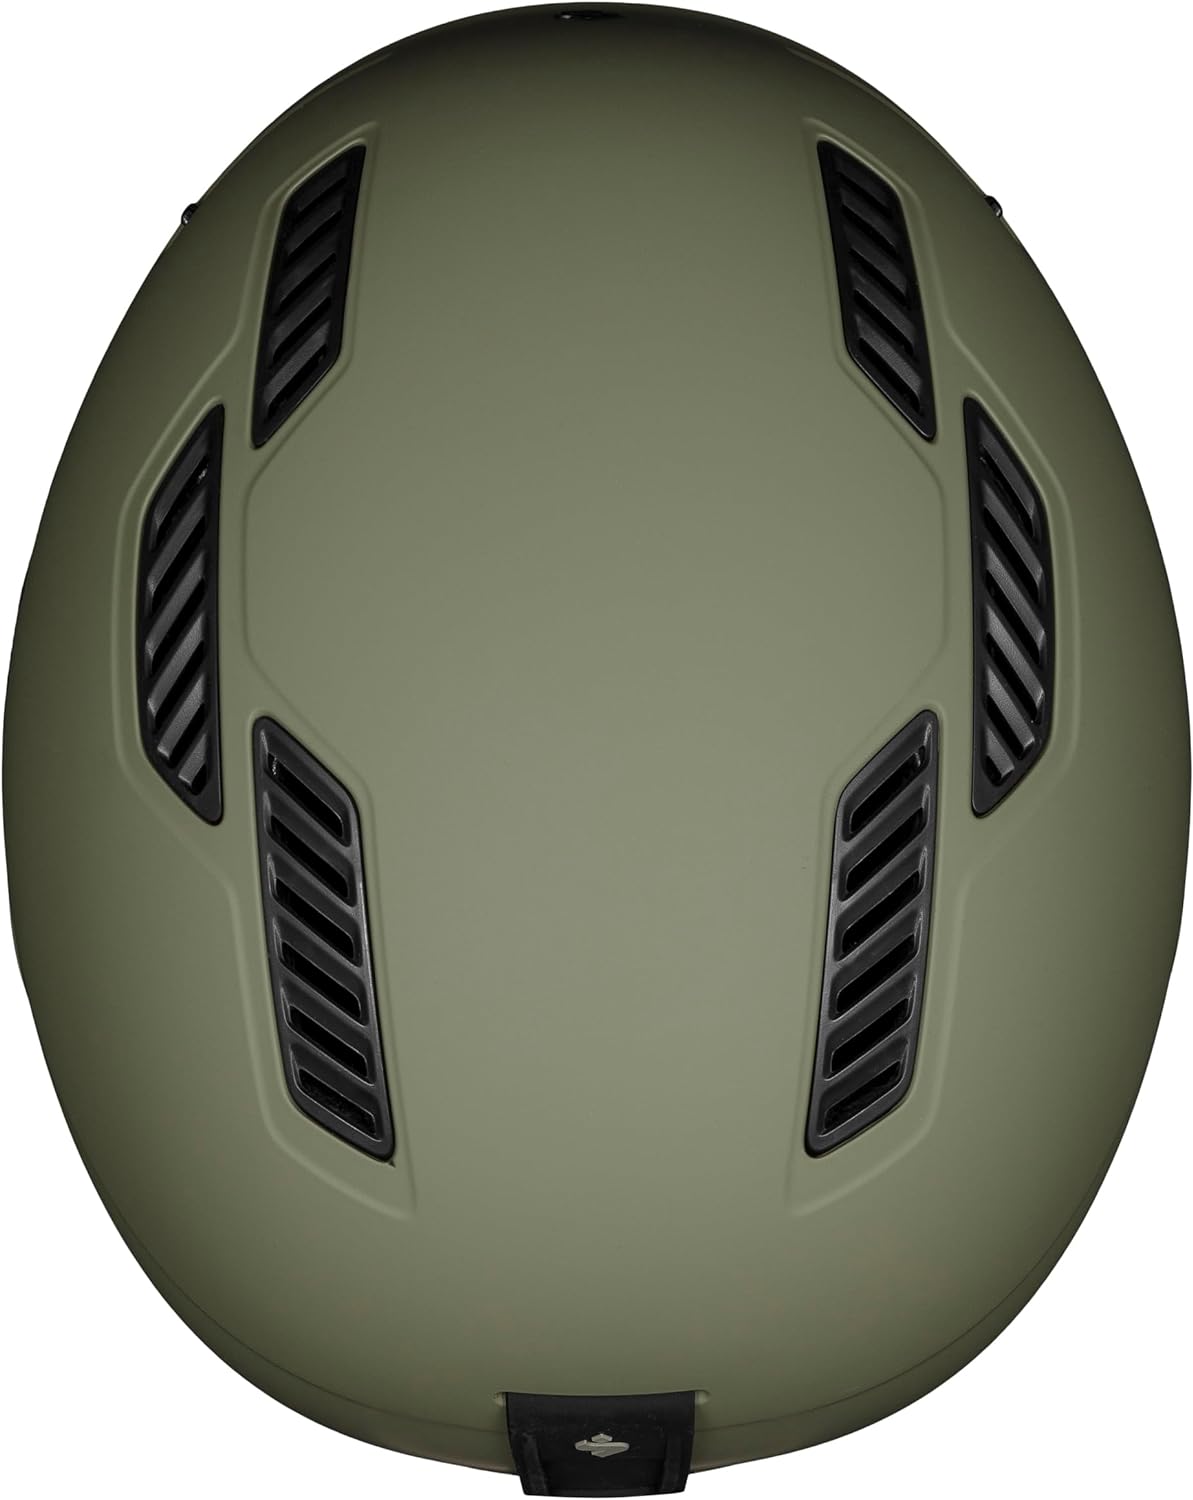 Sweet Protection Igniter 2Vi MIPS Helmet